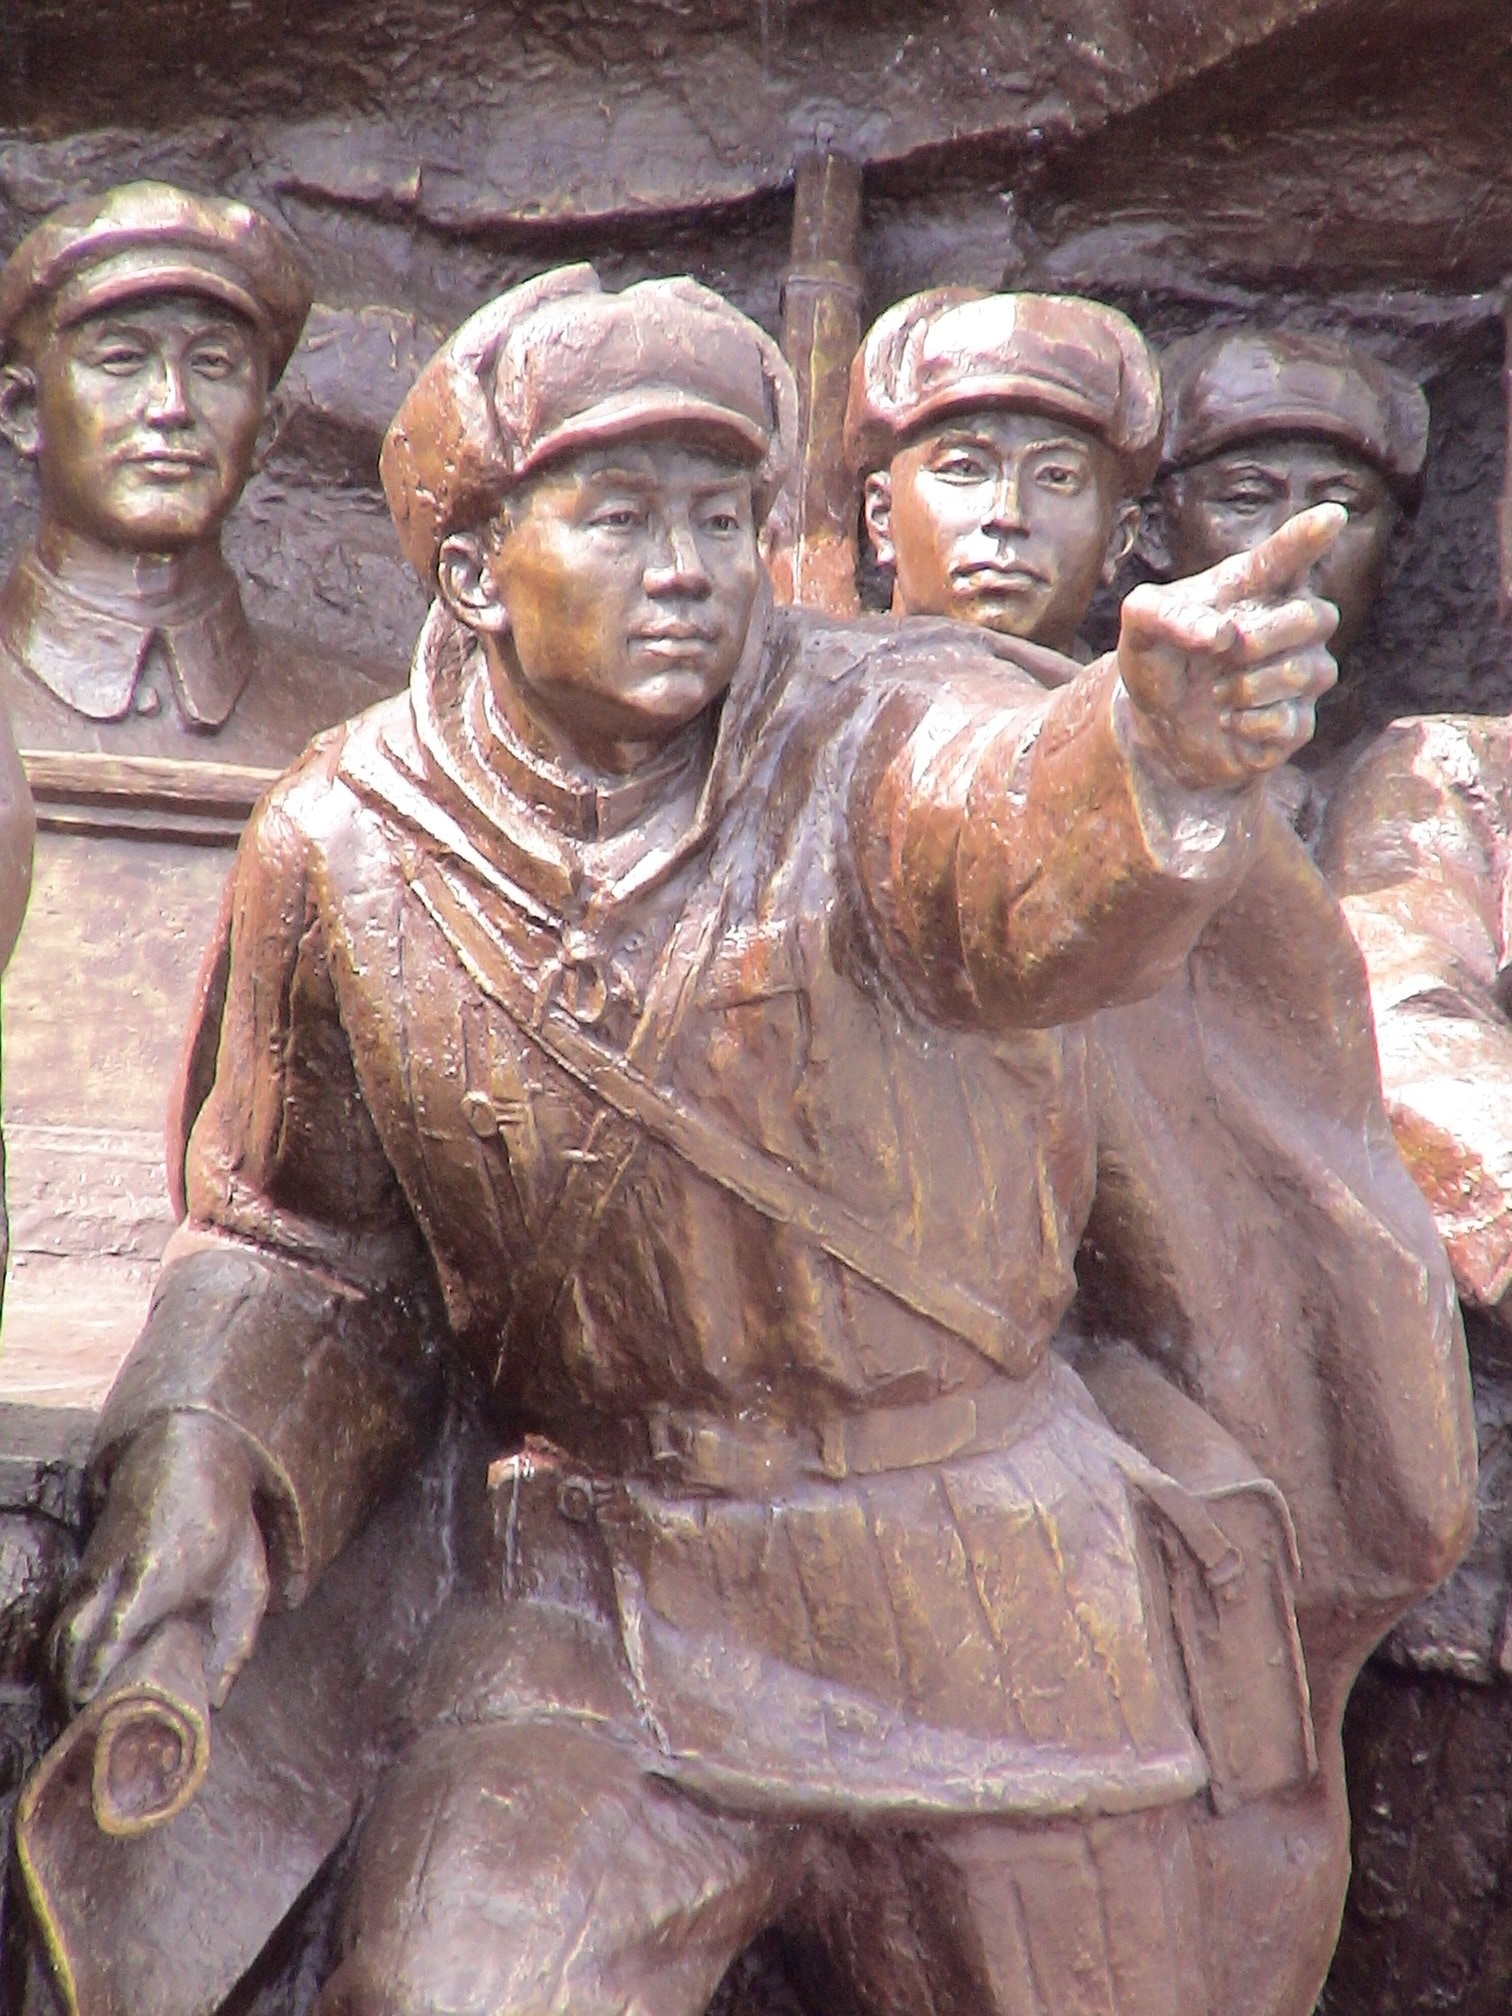 japanese soldier figurines